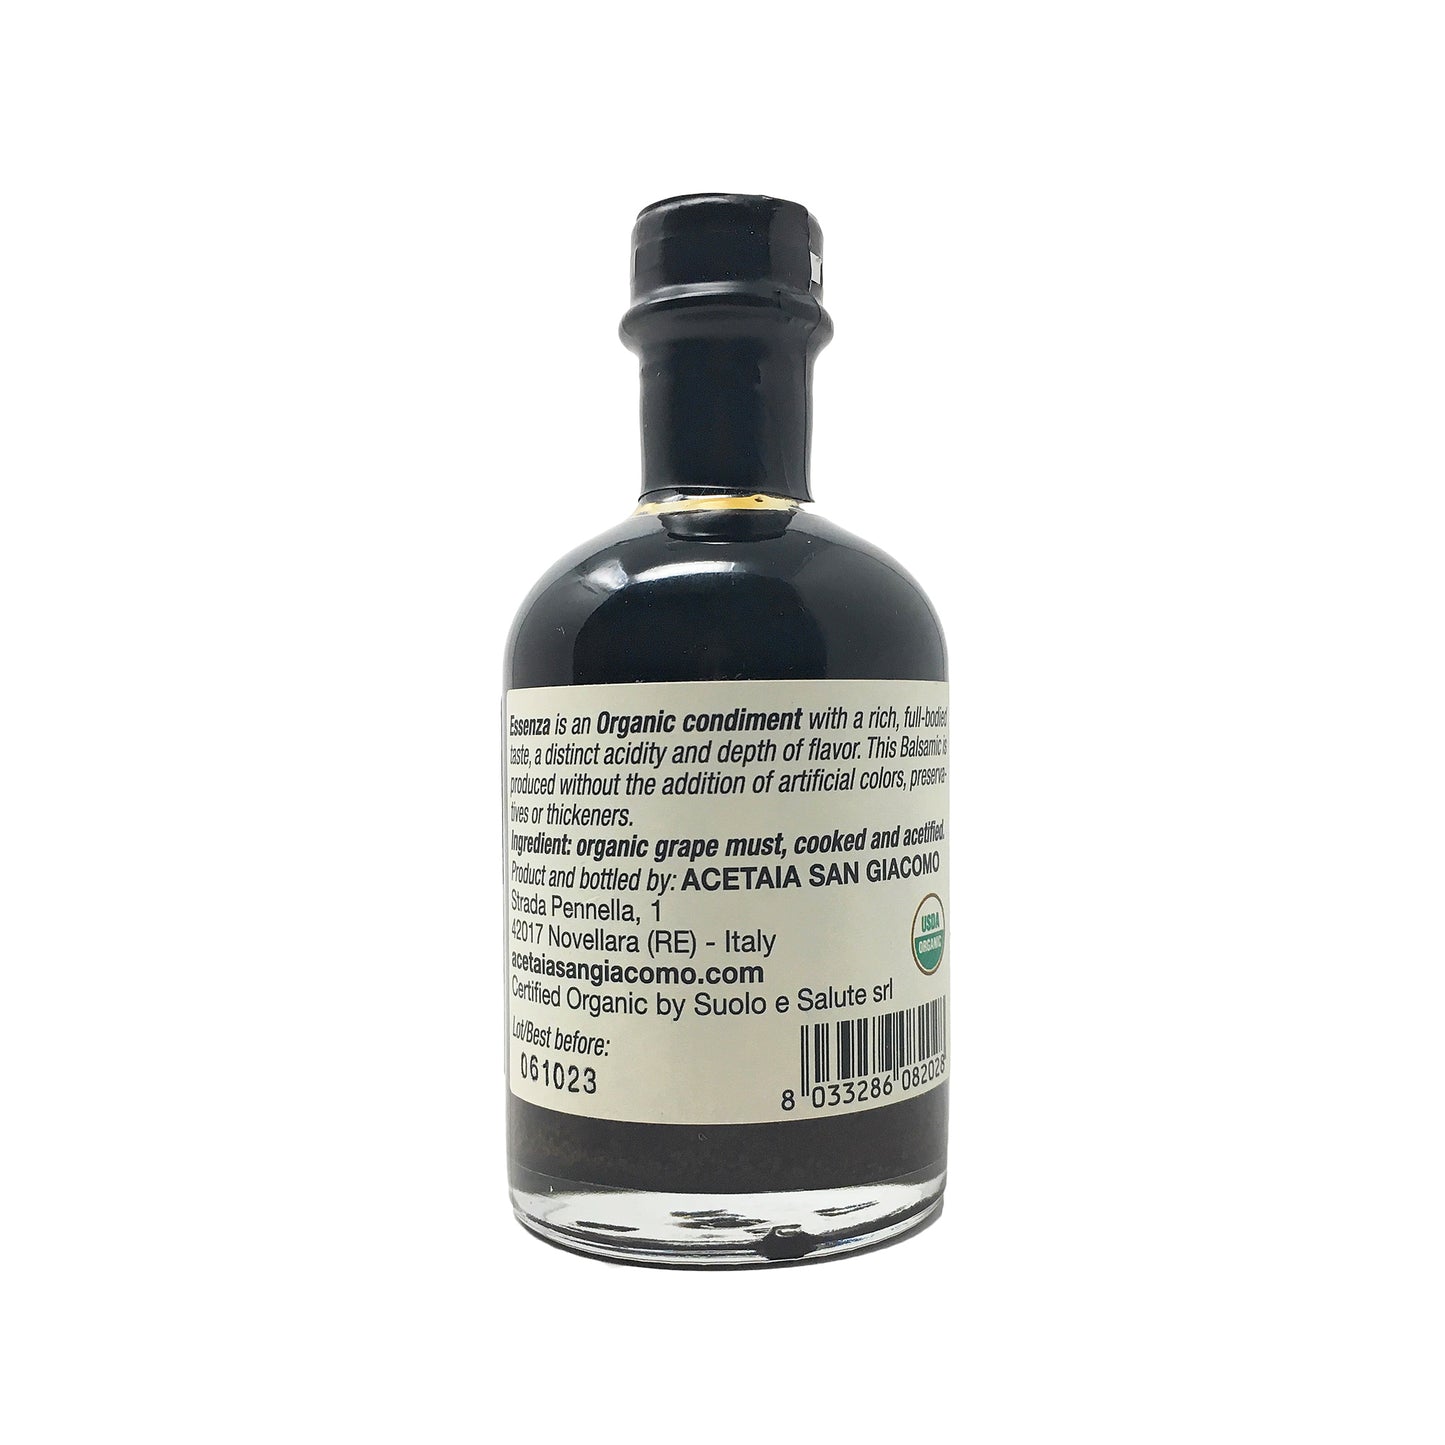 San Giacomo USDA Organic Essenza Balsamic Vinegar (Aged 8 years) 3.37 fl oz (100ml)